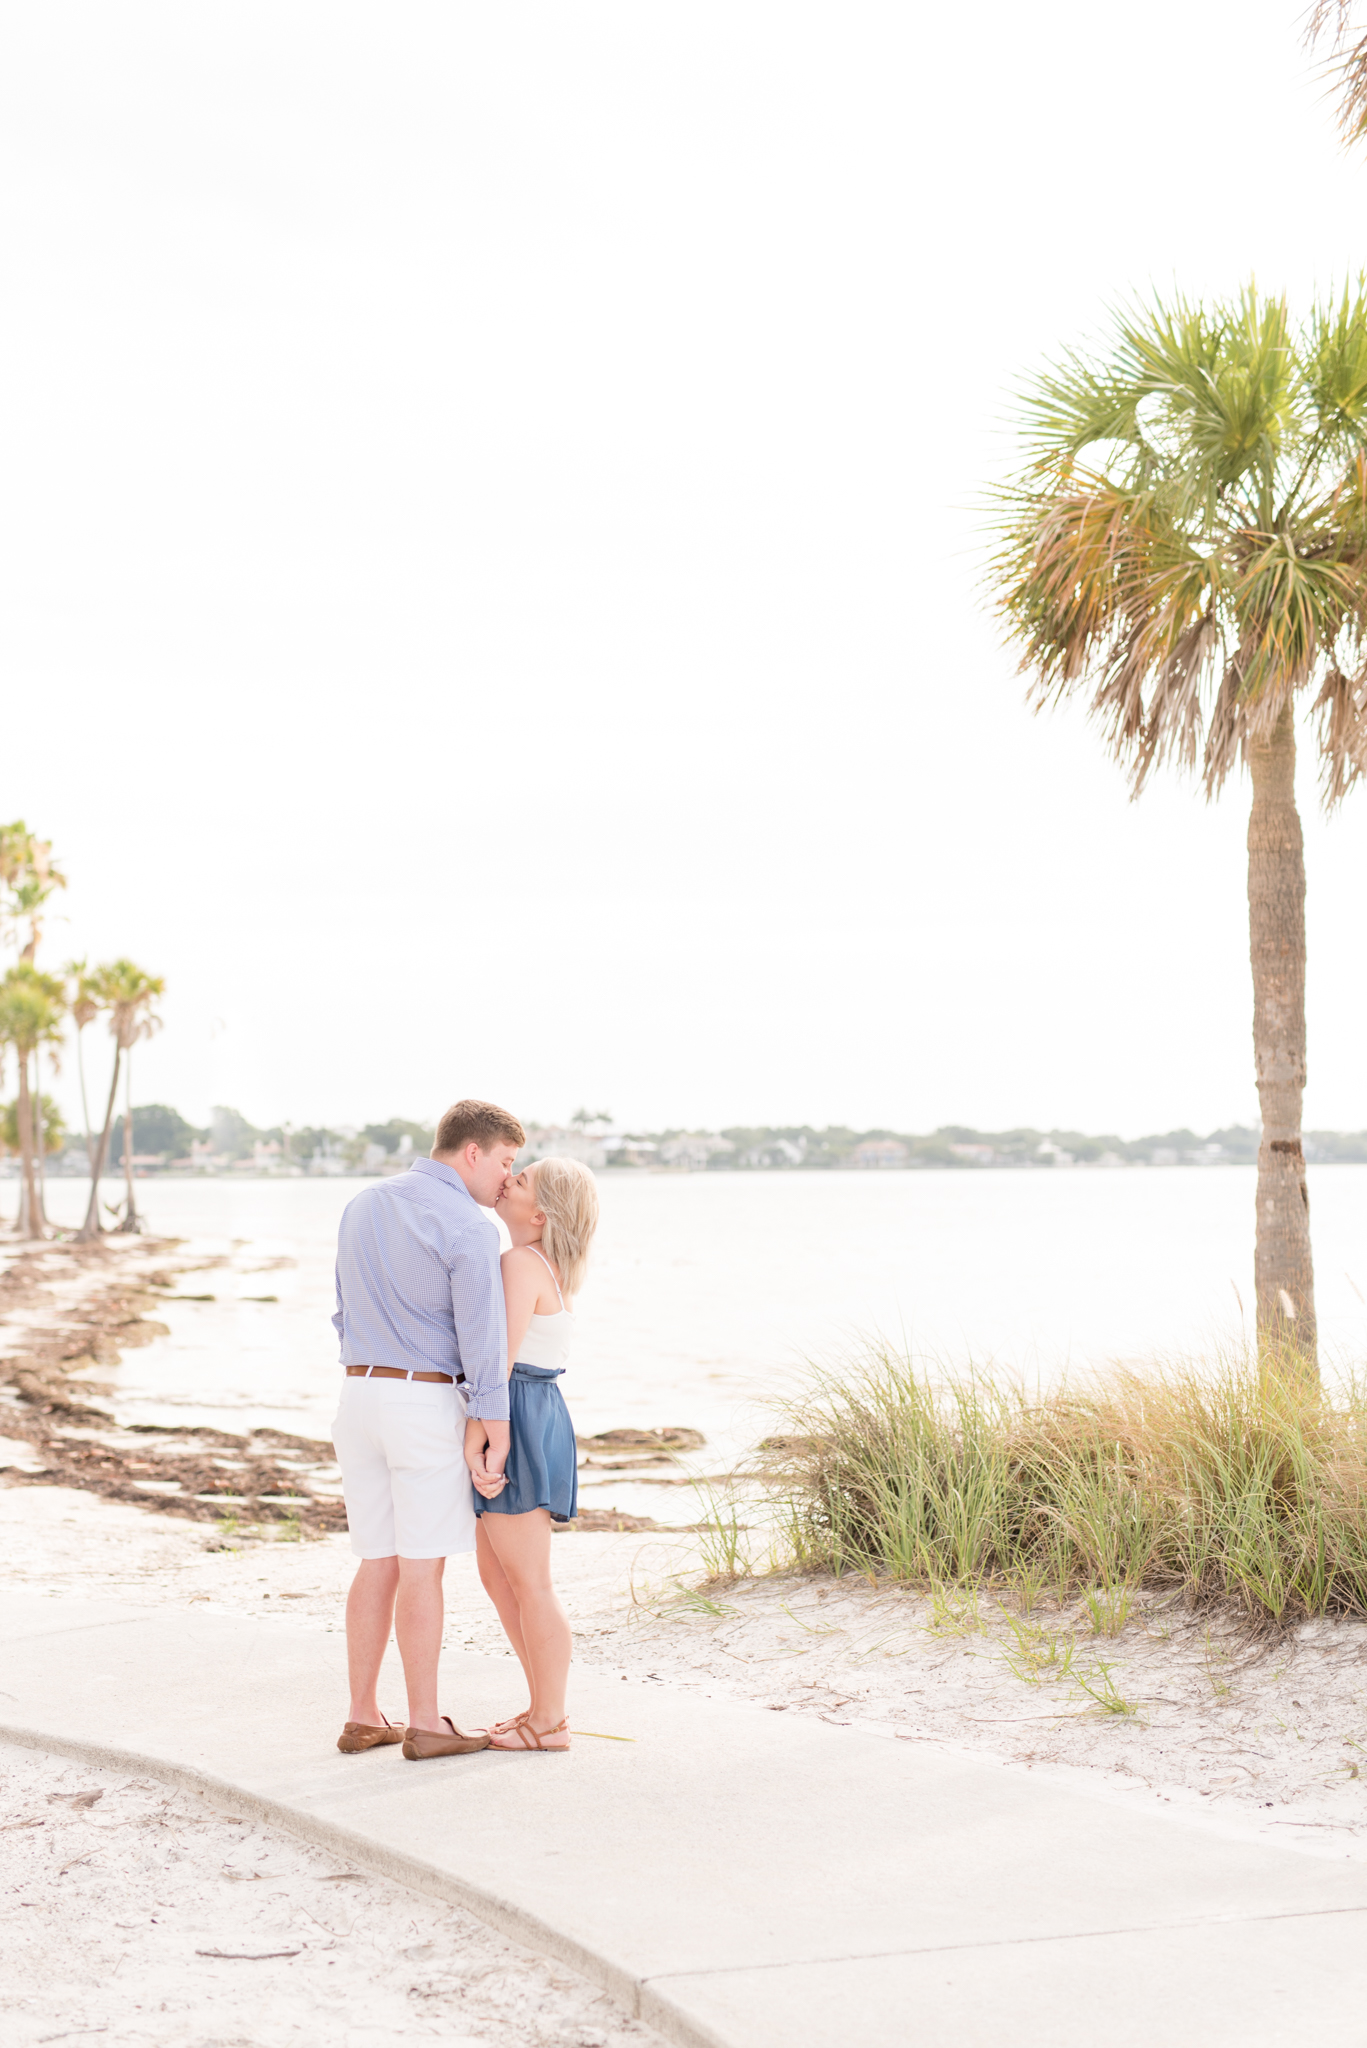 Couple kisses on beach boardwalk.